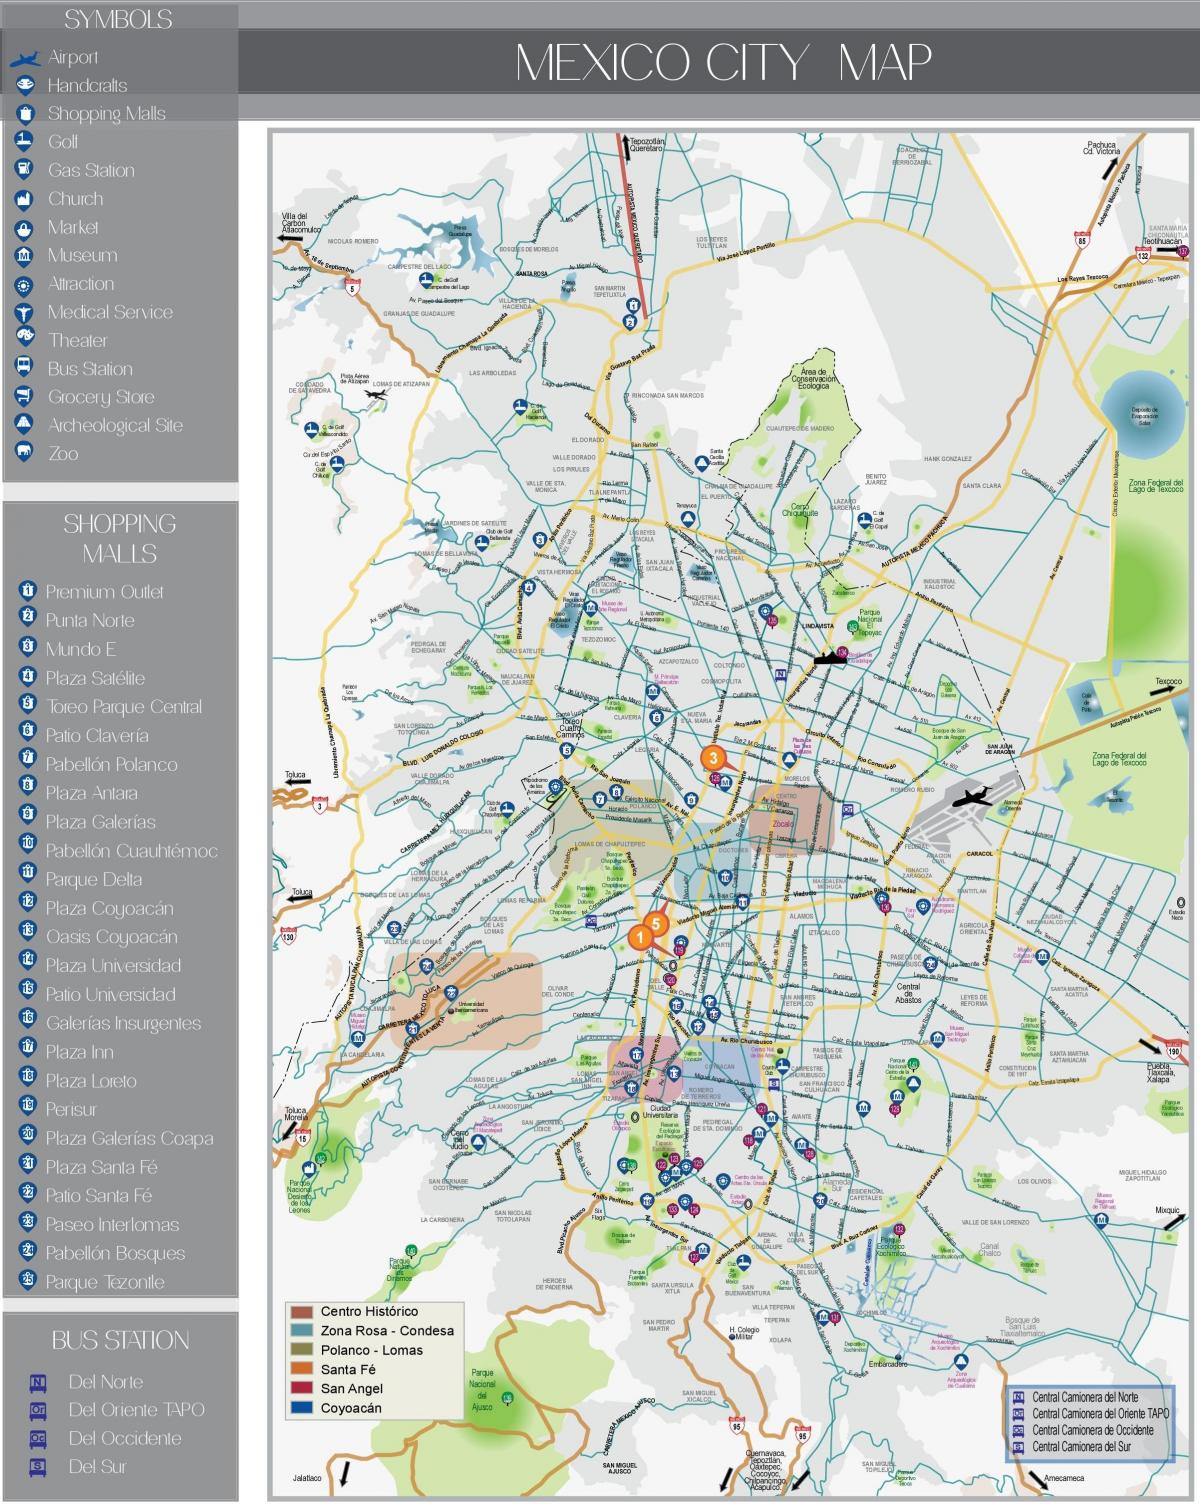 Mexico City atrakcije mapu